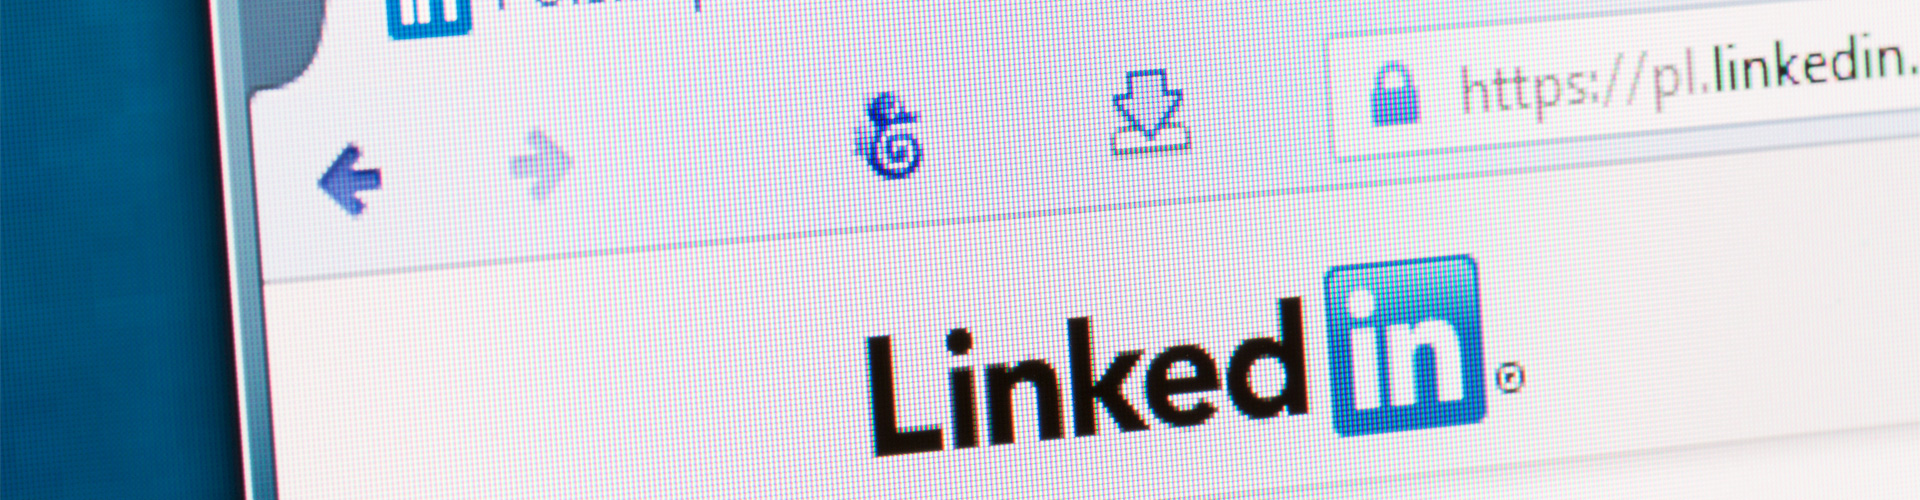 Optimize Your LinkedIn Profile